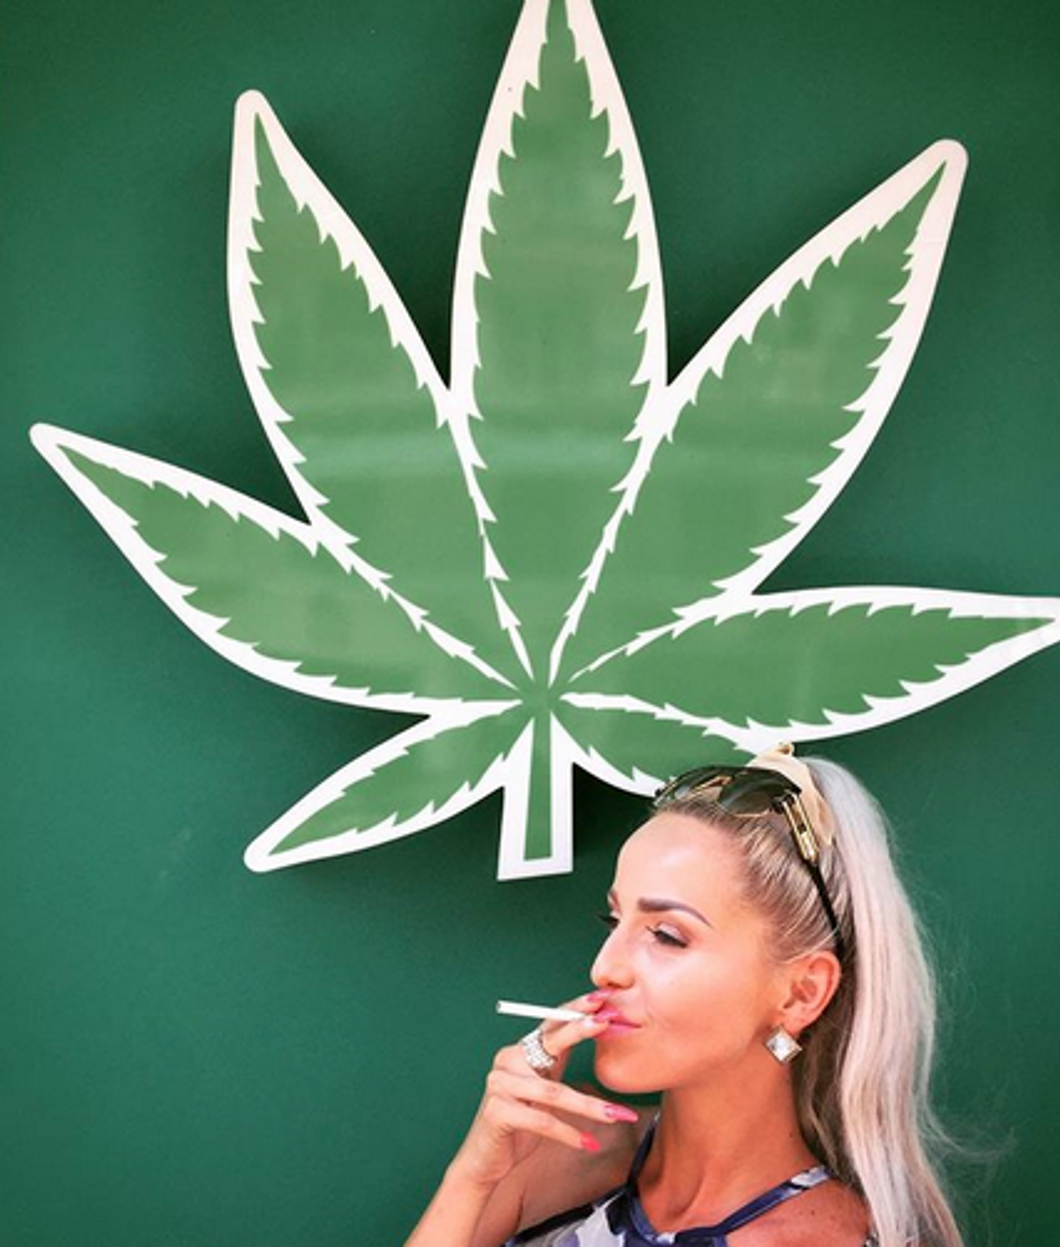 New York Joins List Of States Legalizing Marijuana